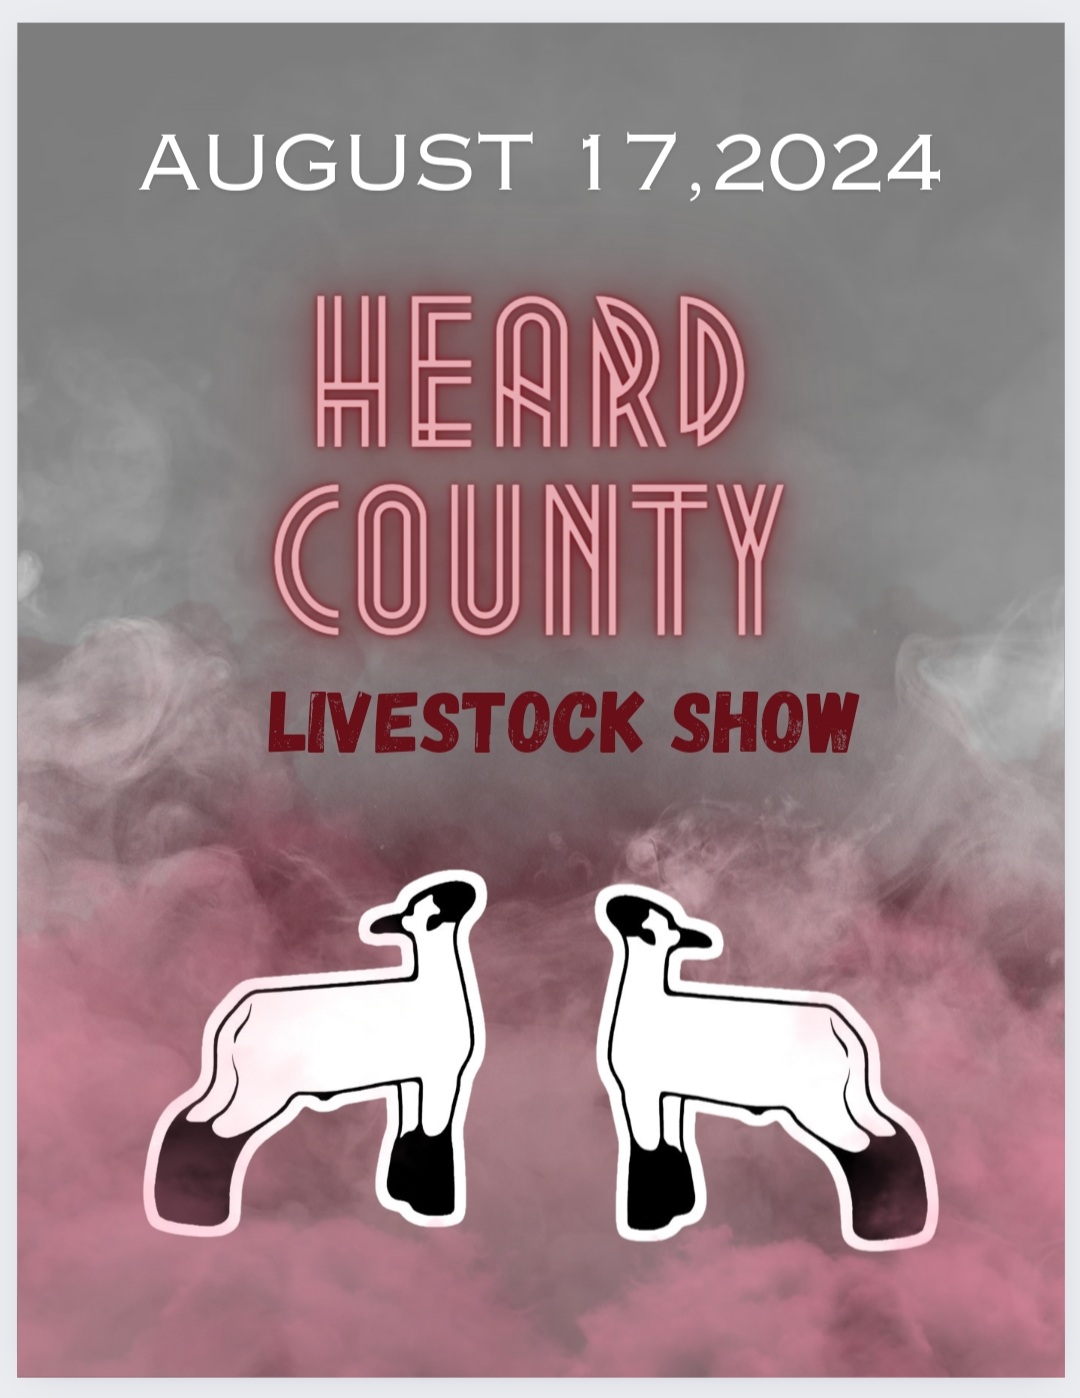 Image for 2024 Heard County Livestock Lamb Show